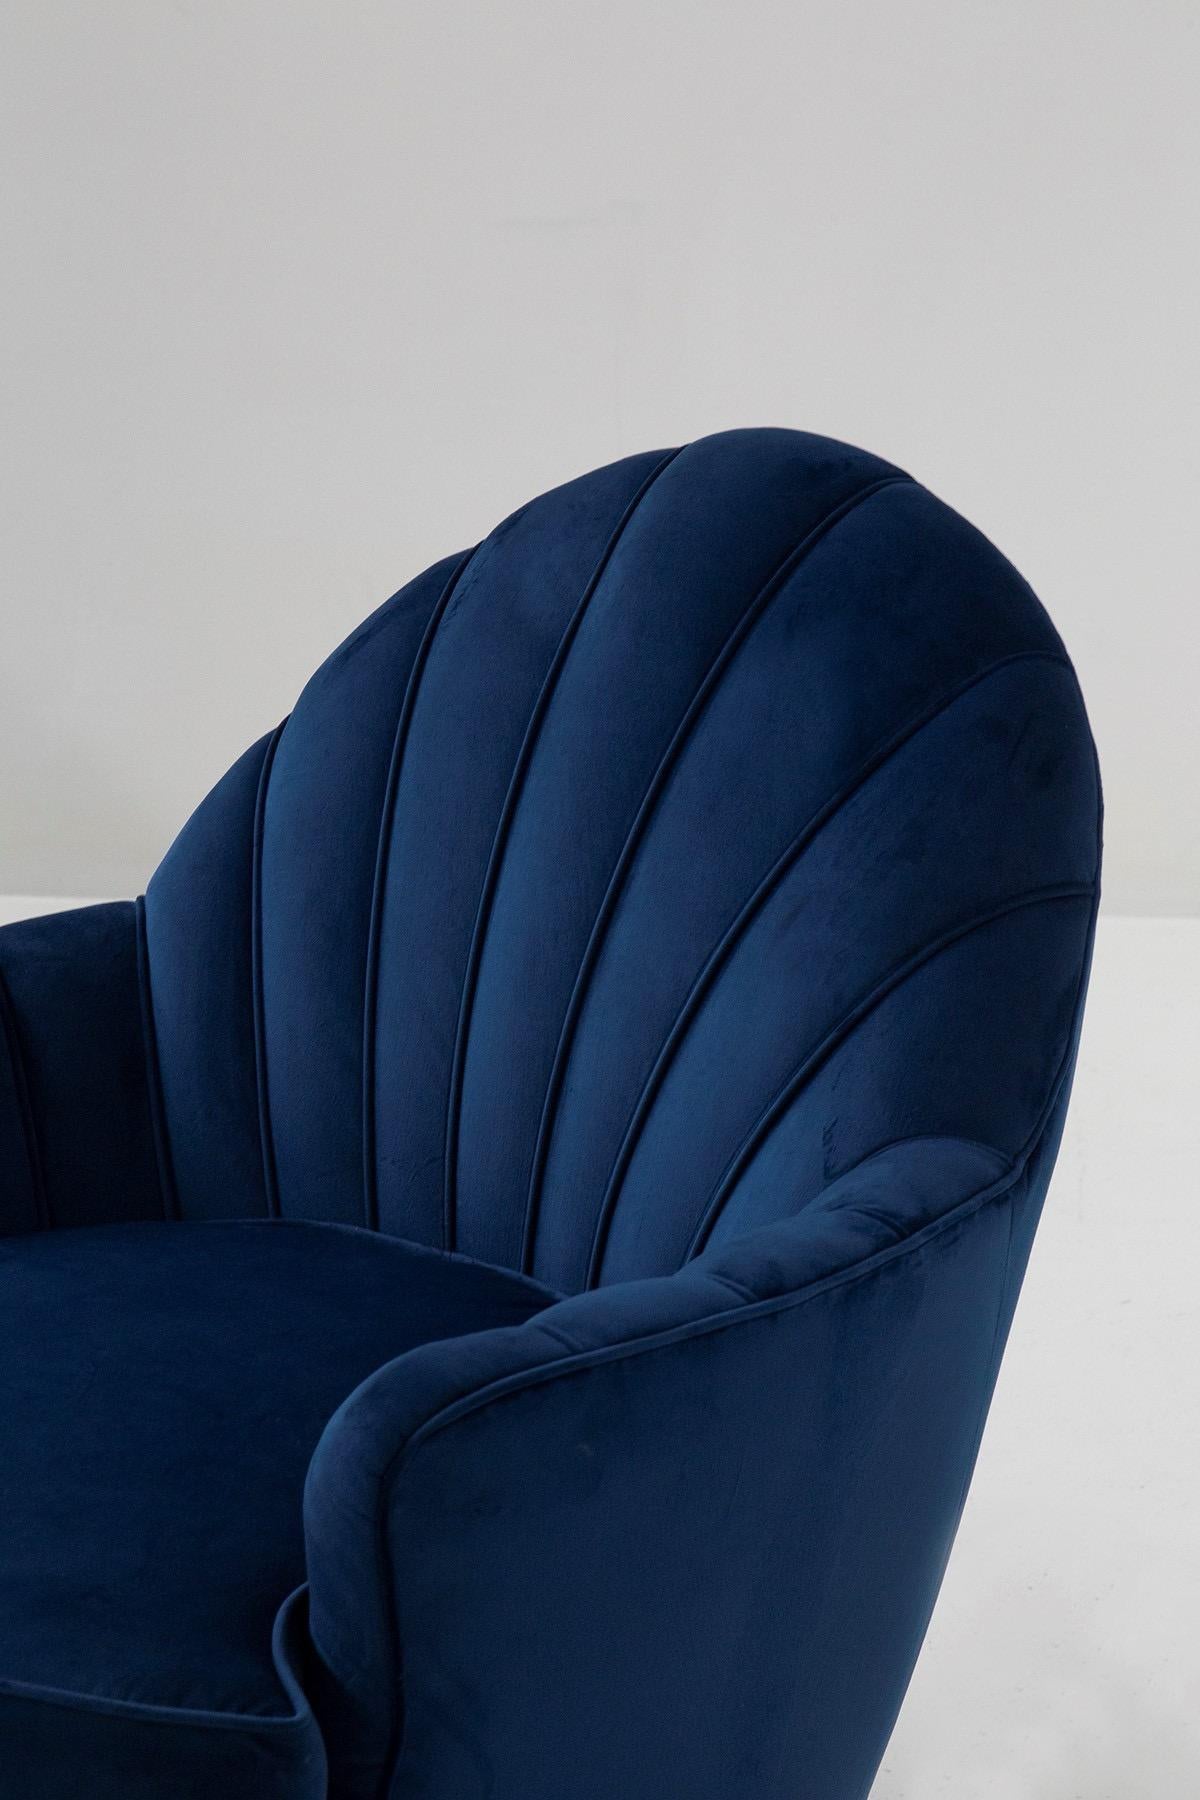 Mid-20th Century Mid-Century Modern 1950's Set 2 Armchairs Blue Velvet Guglielmo Ulrich (attrib) For Sale